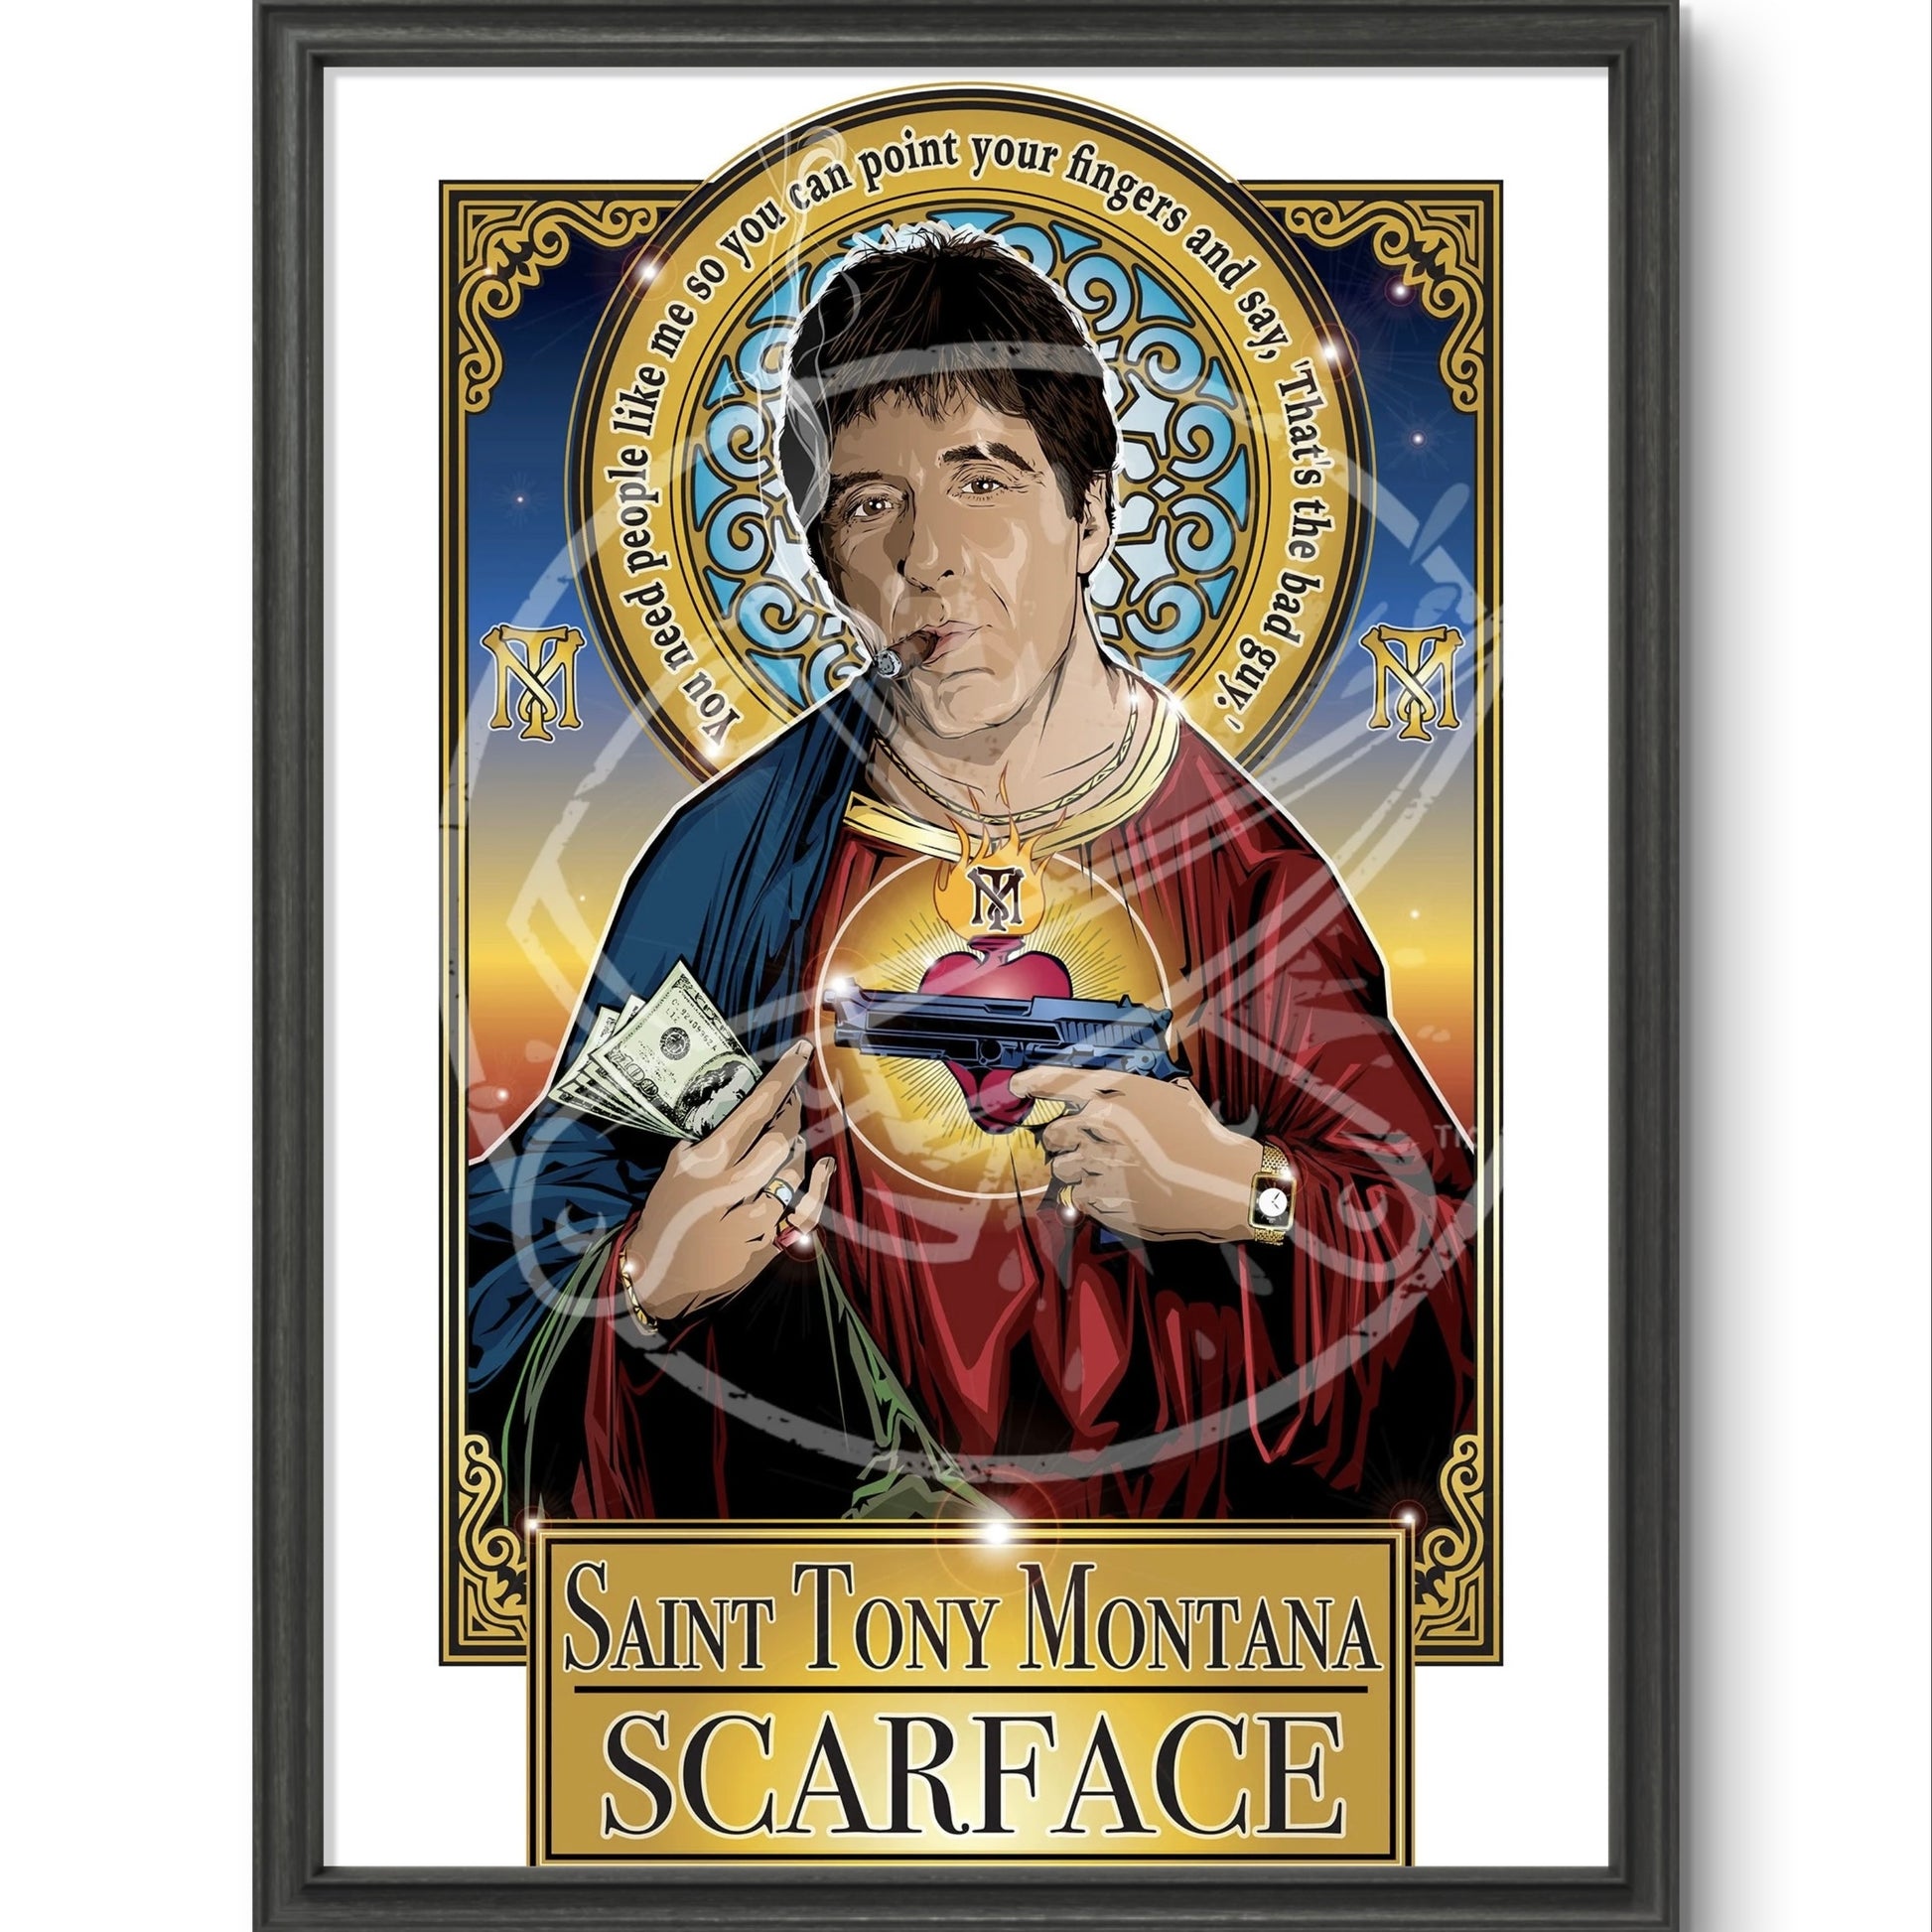 Saint Tony Montana Scarface Poster Cleaverandblade.com